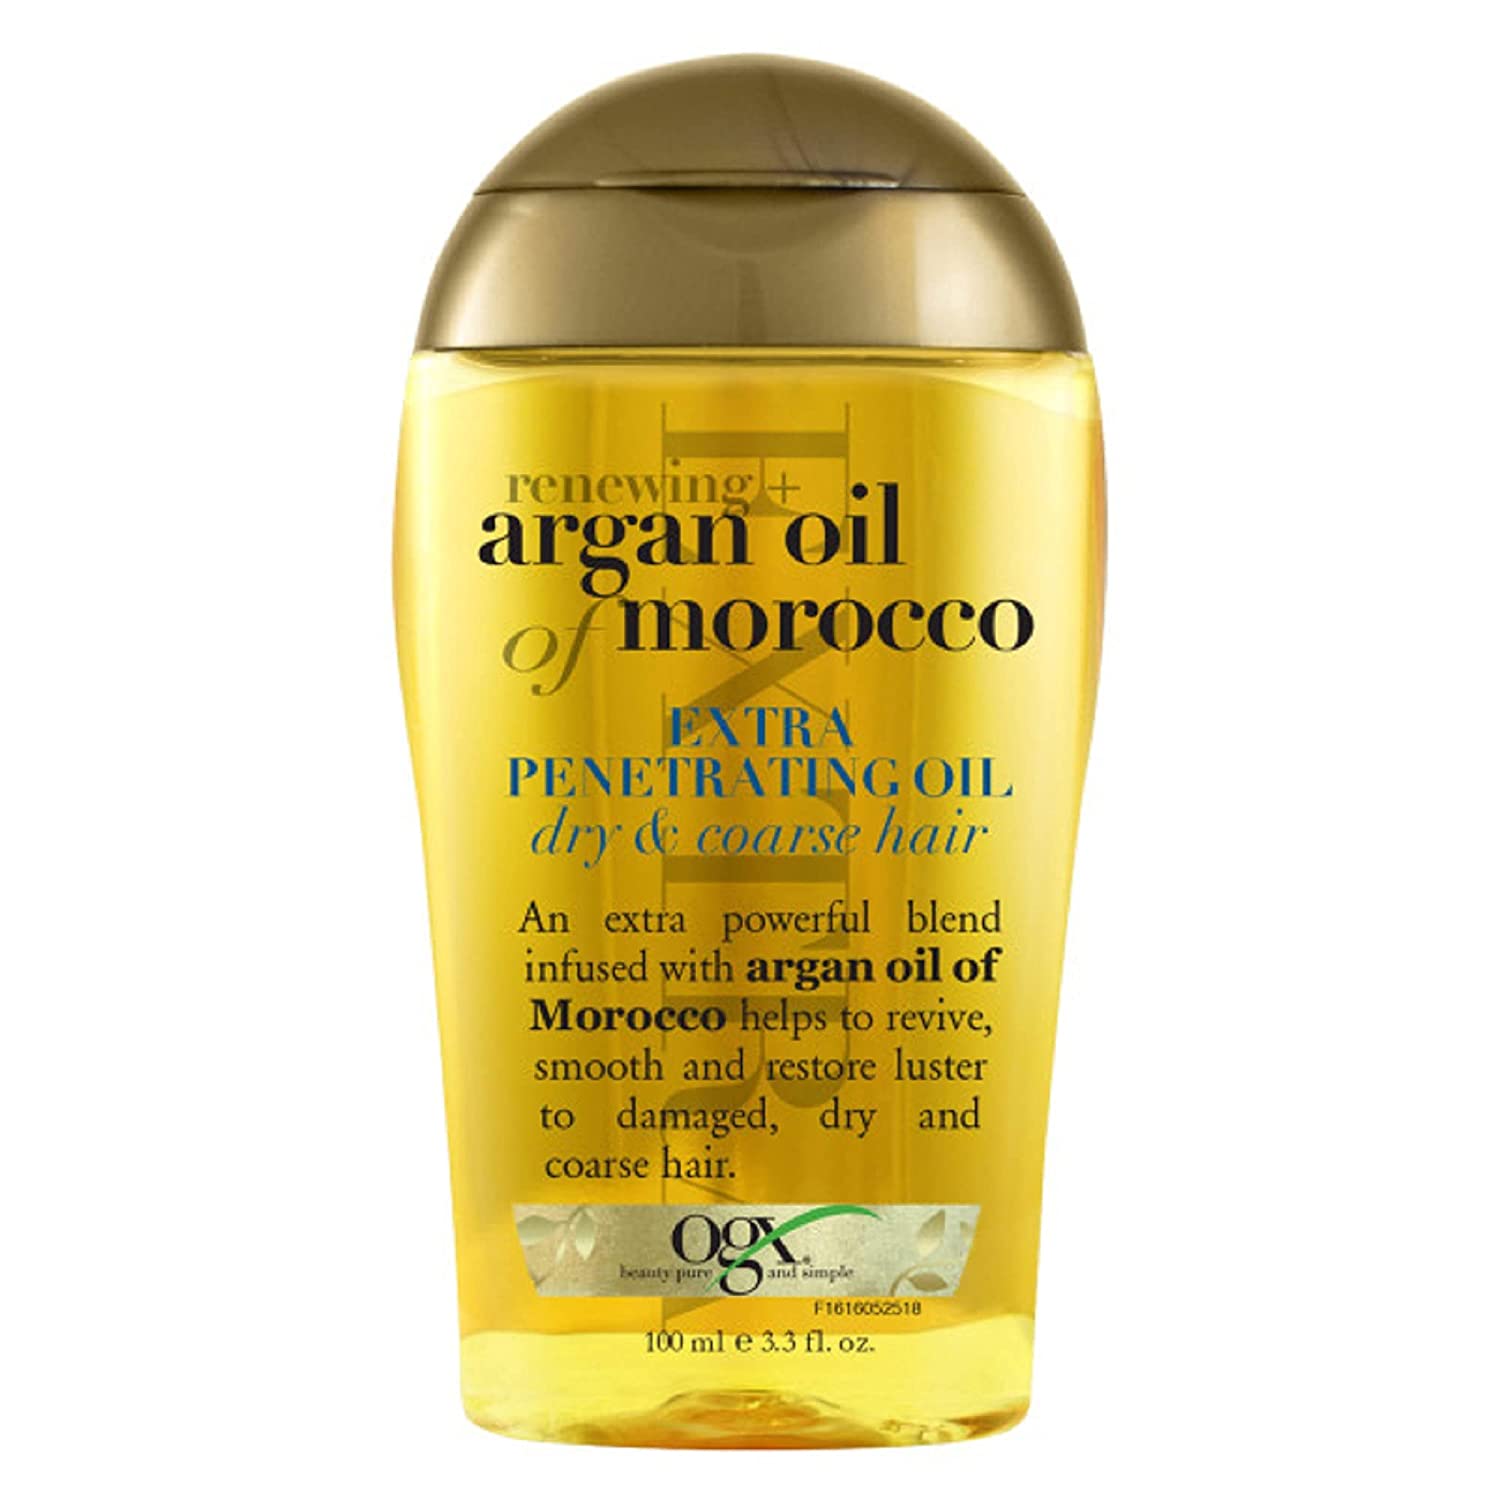 OGX Renewing+ Argan oil of Extra Morocco Penetrating Oil OGX